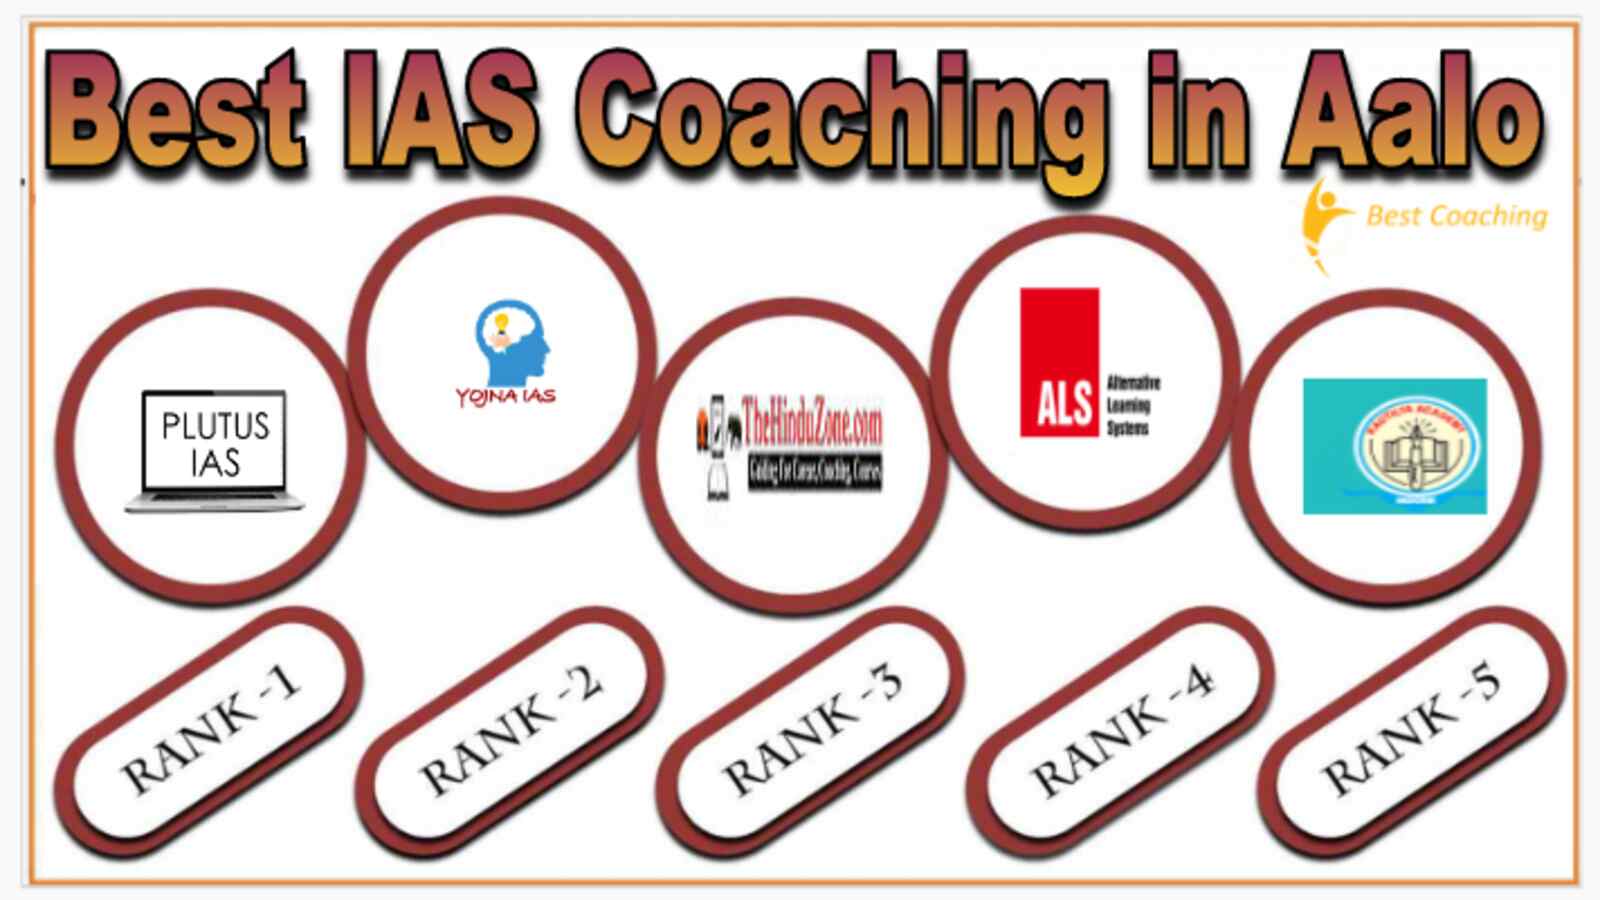 Best IAS Coaching in Aalo